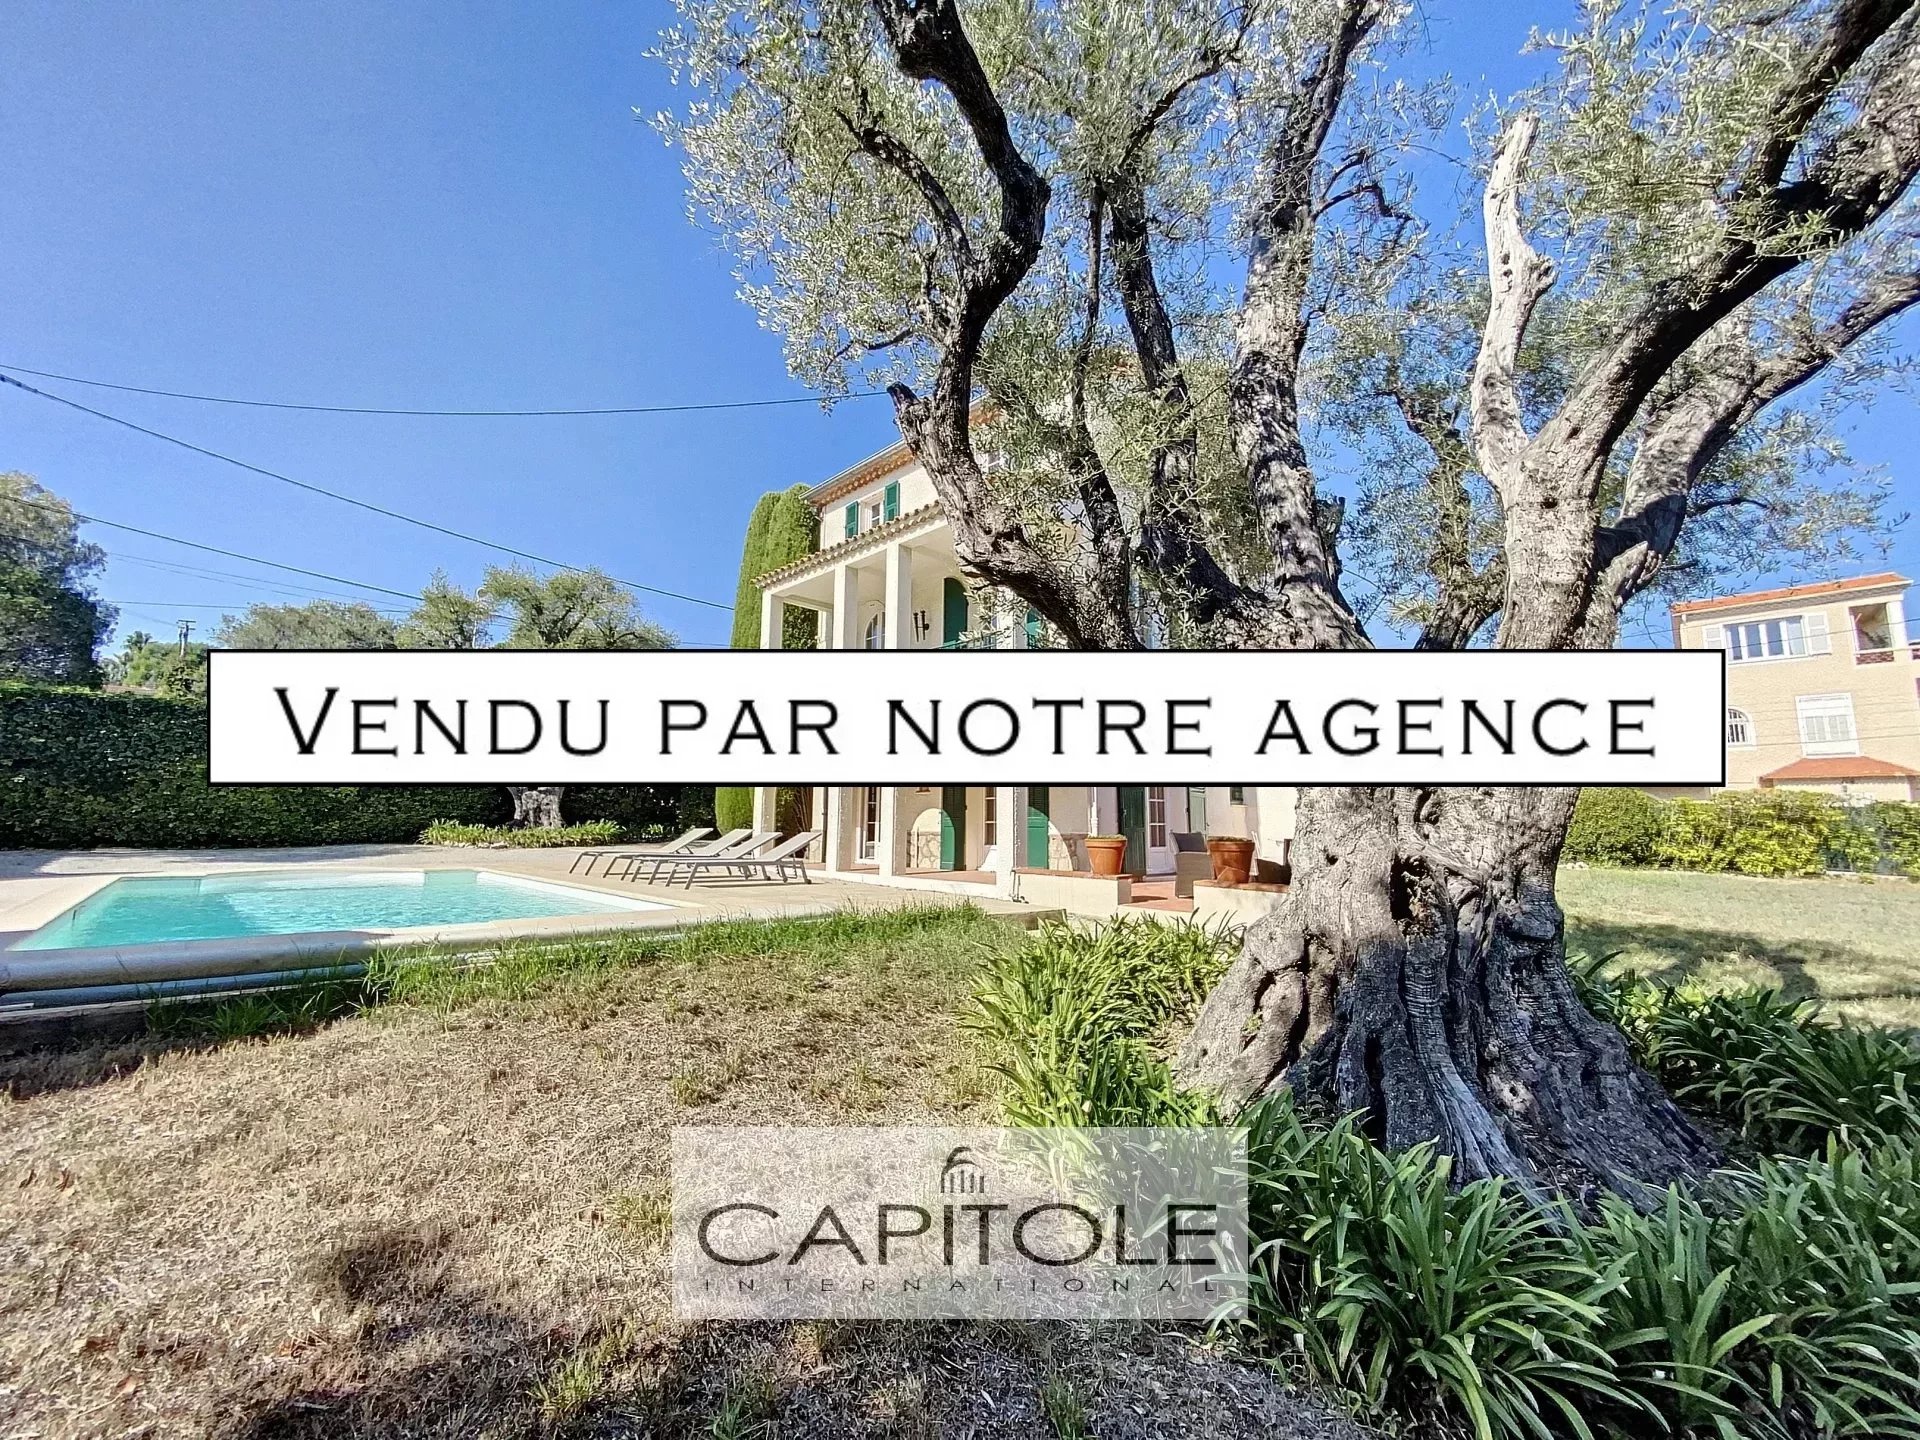 A vendre, Exclusivite, Cap d'Antibes, villa familiale 208 m², terrain, piscine